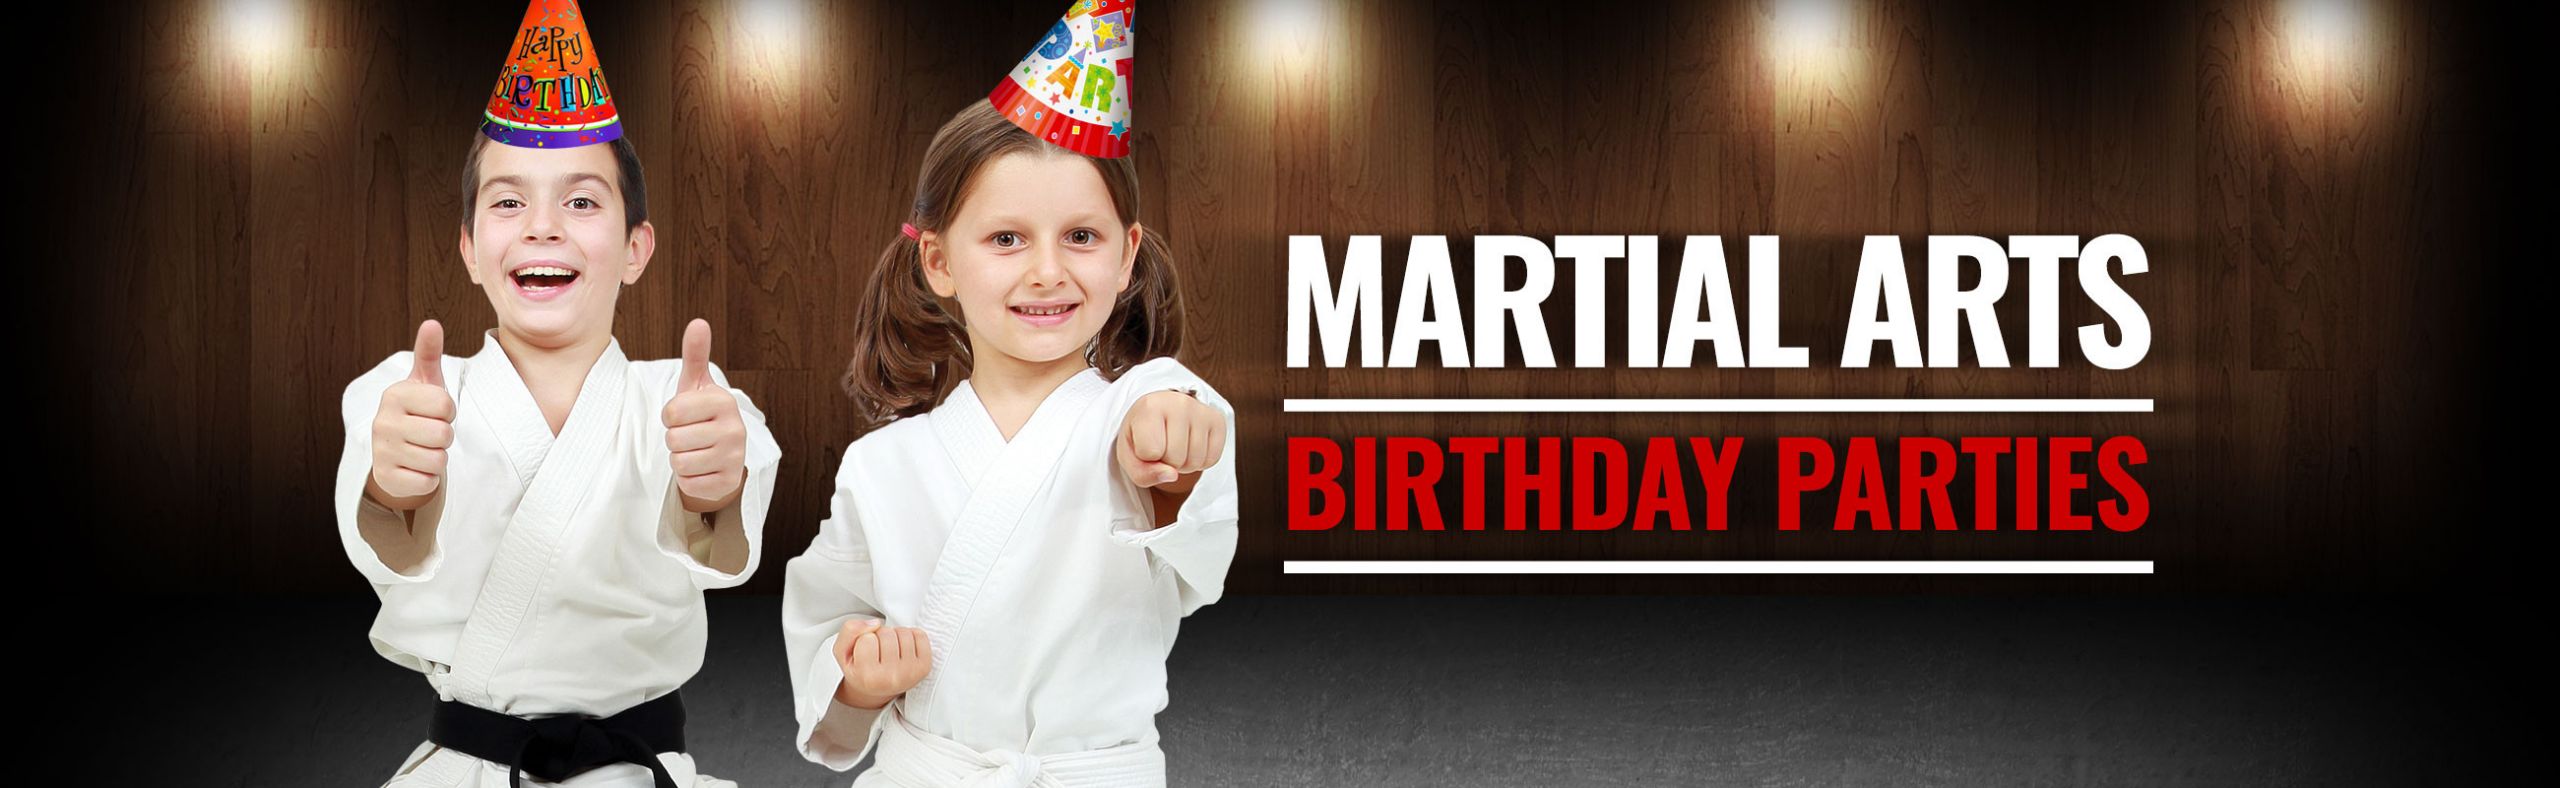 Taekwondo Birthday Party
 Martial Arts Birthday Party at Emerald Dragon Karate in